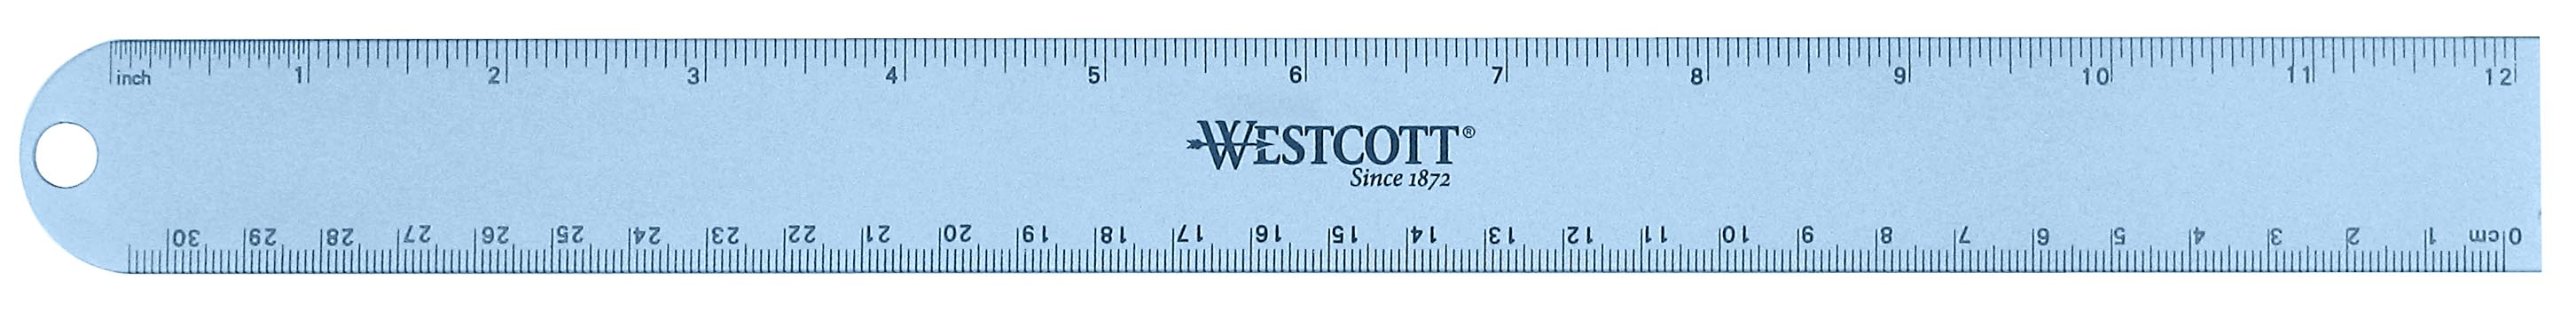 Westcott Anodized Aluminum Ruler, 12